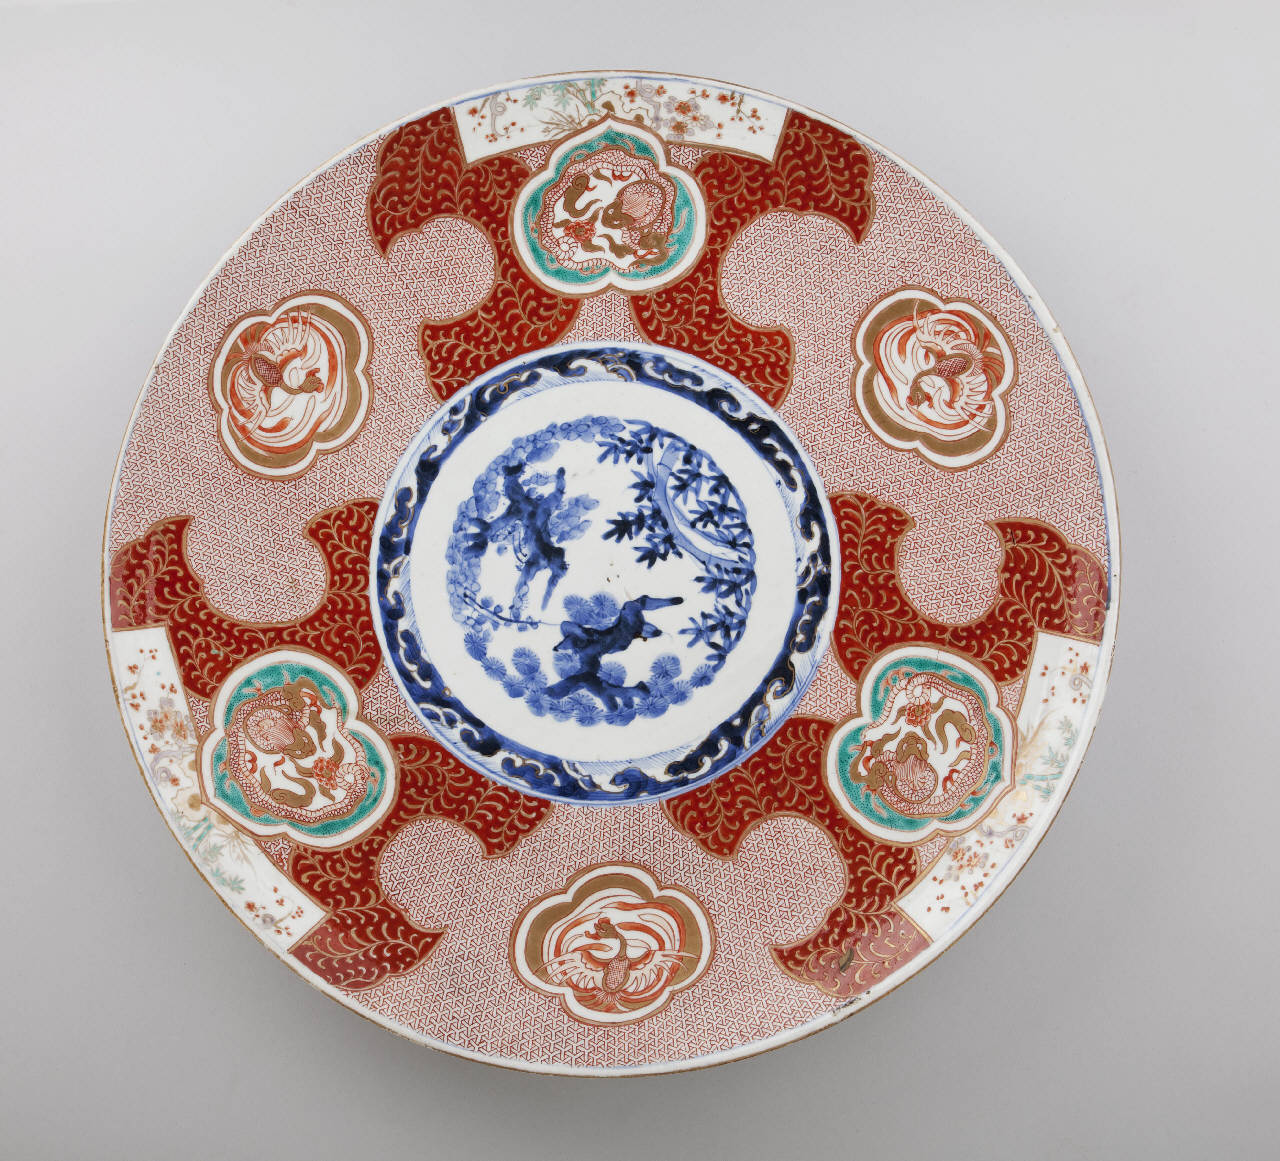 motivi decorativi vegetali, drago, uccelli, motivi decorativi geometrici (piatto) - manifattura giapponese (ultimo quarto sec. XIX)